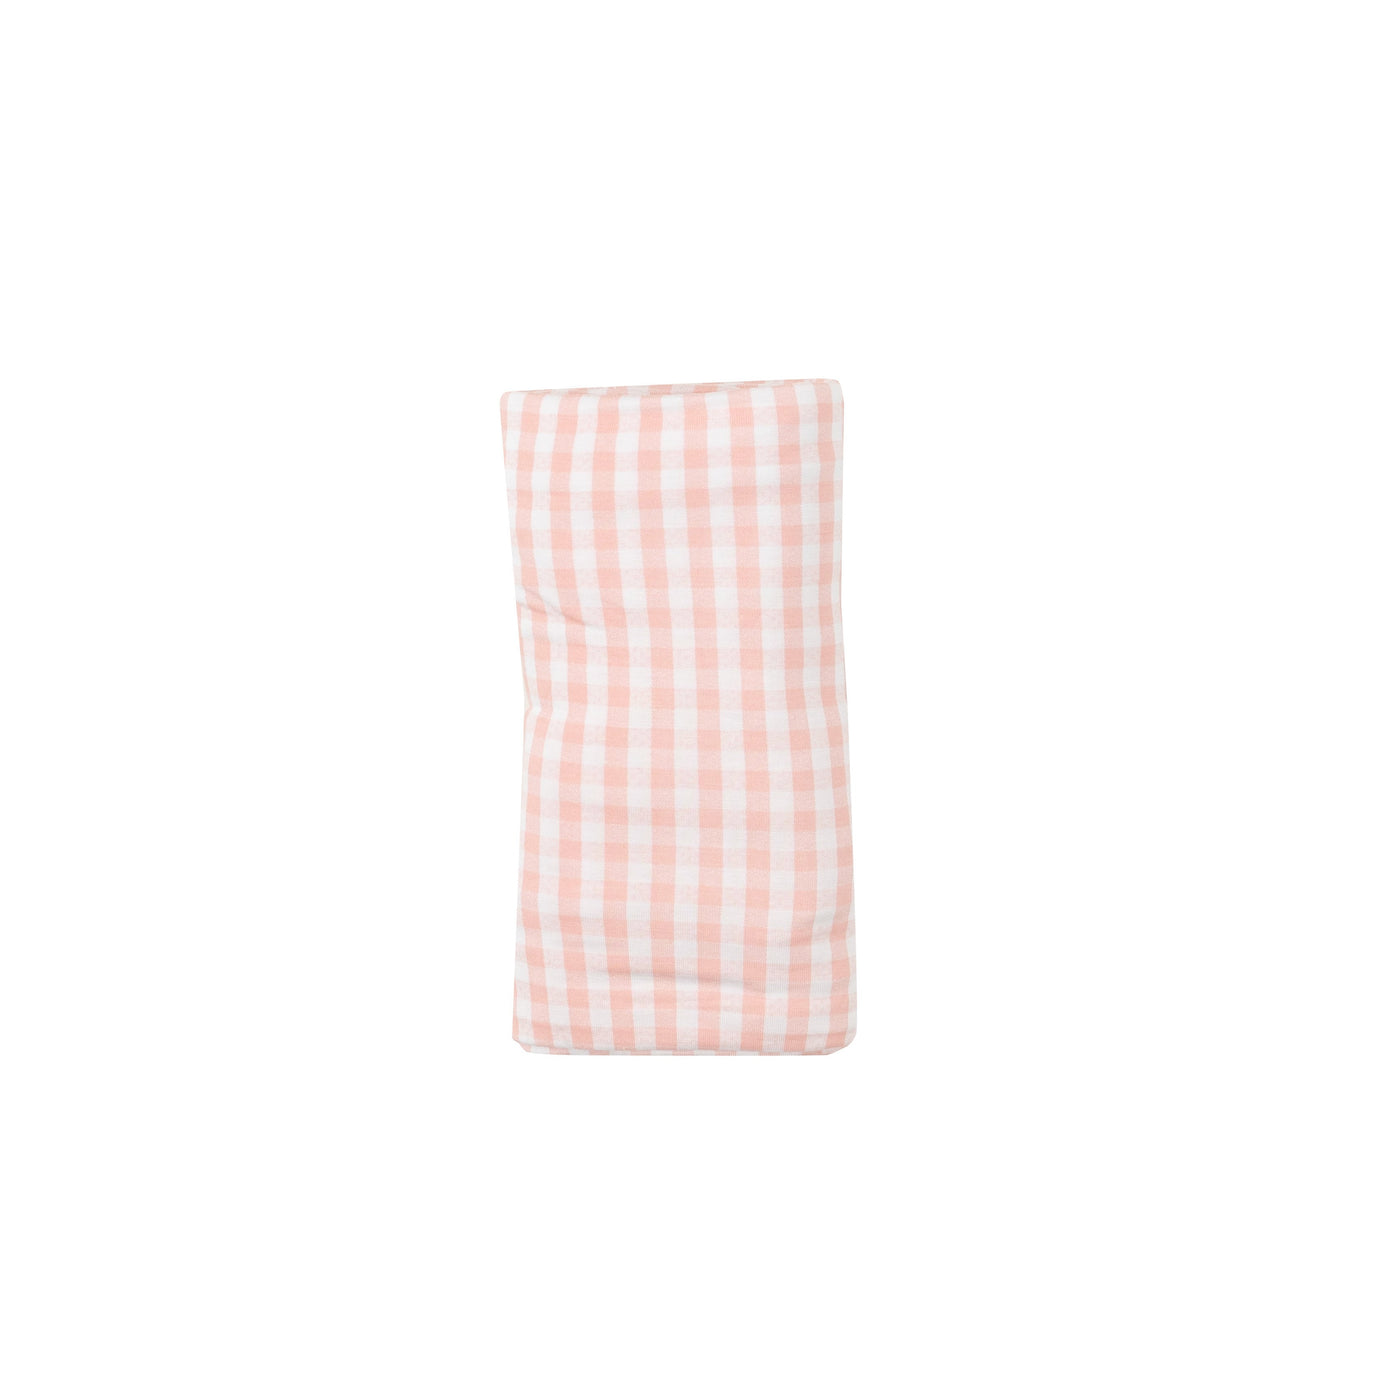 Swaddle Blanket - Mini Gingham Pink - Angel Dear